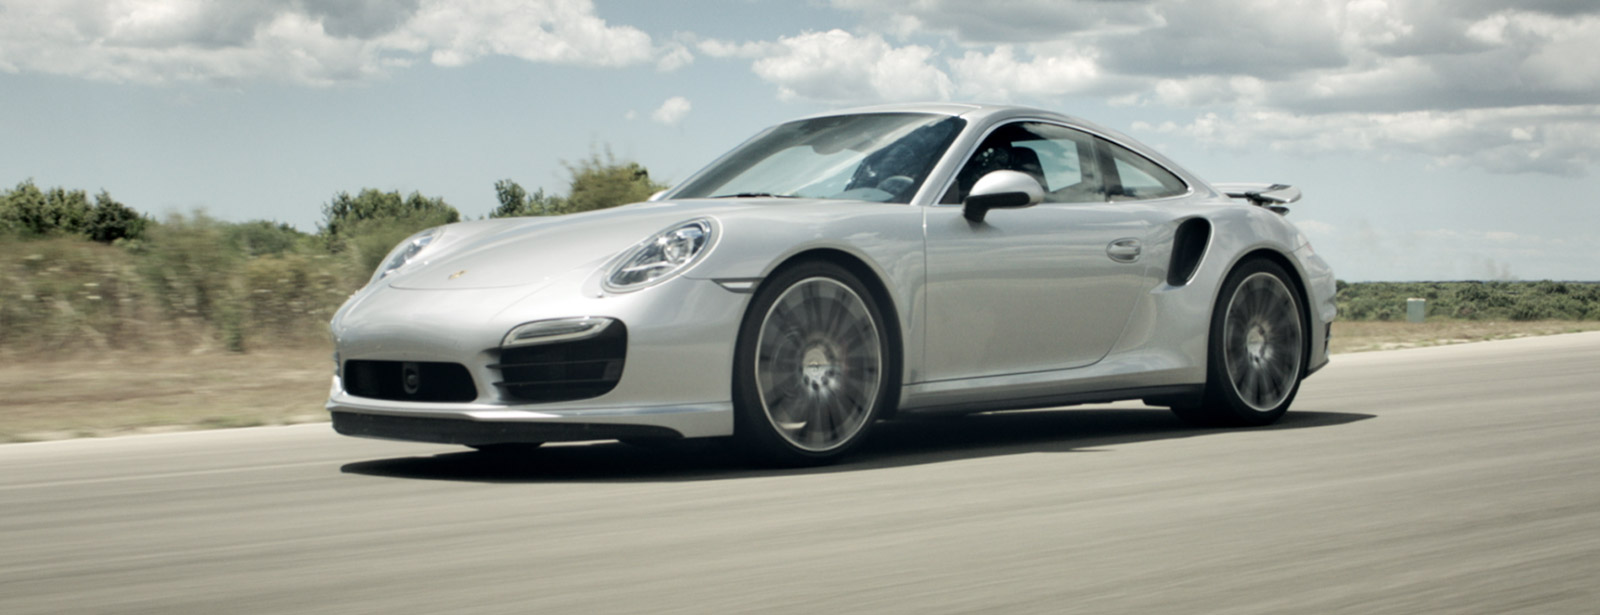 Porsche vrea sa dezvolte o benzina la fel de putin nociva ca o masina electrica